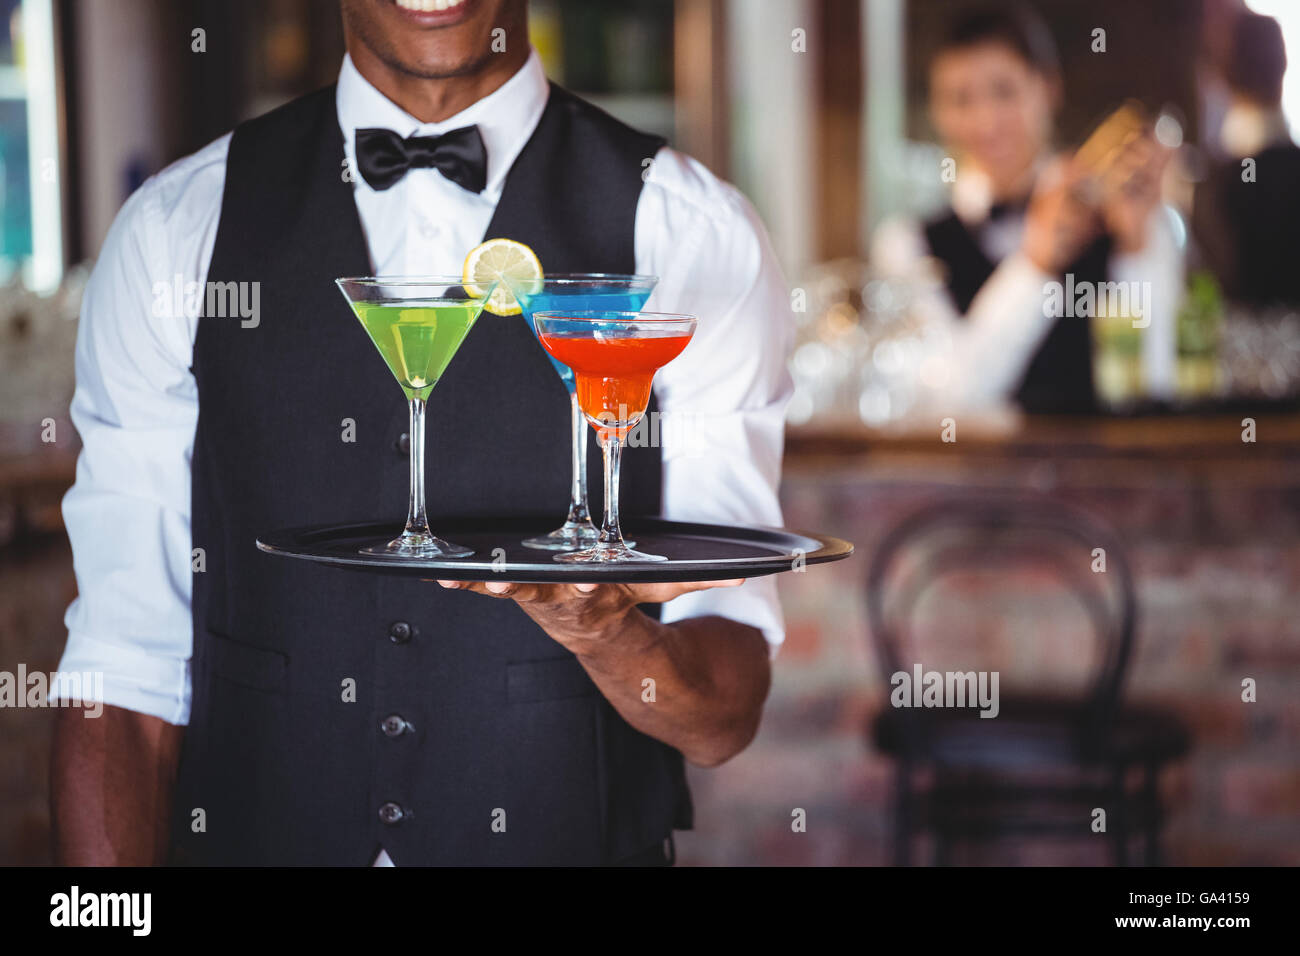 https://c8.alamy.com/comp/GA4159/bartender-holding-serving-tray-with-cocktail-glasses-GA4159.jpg